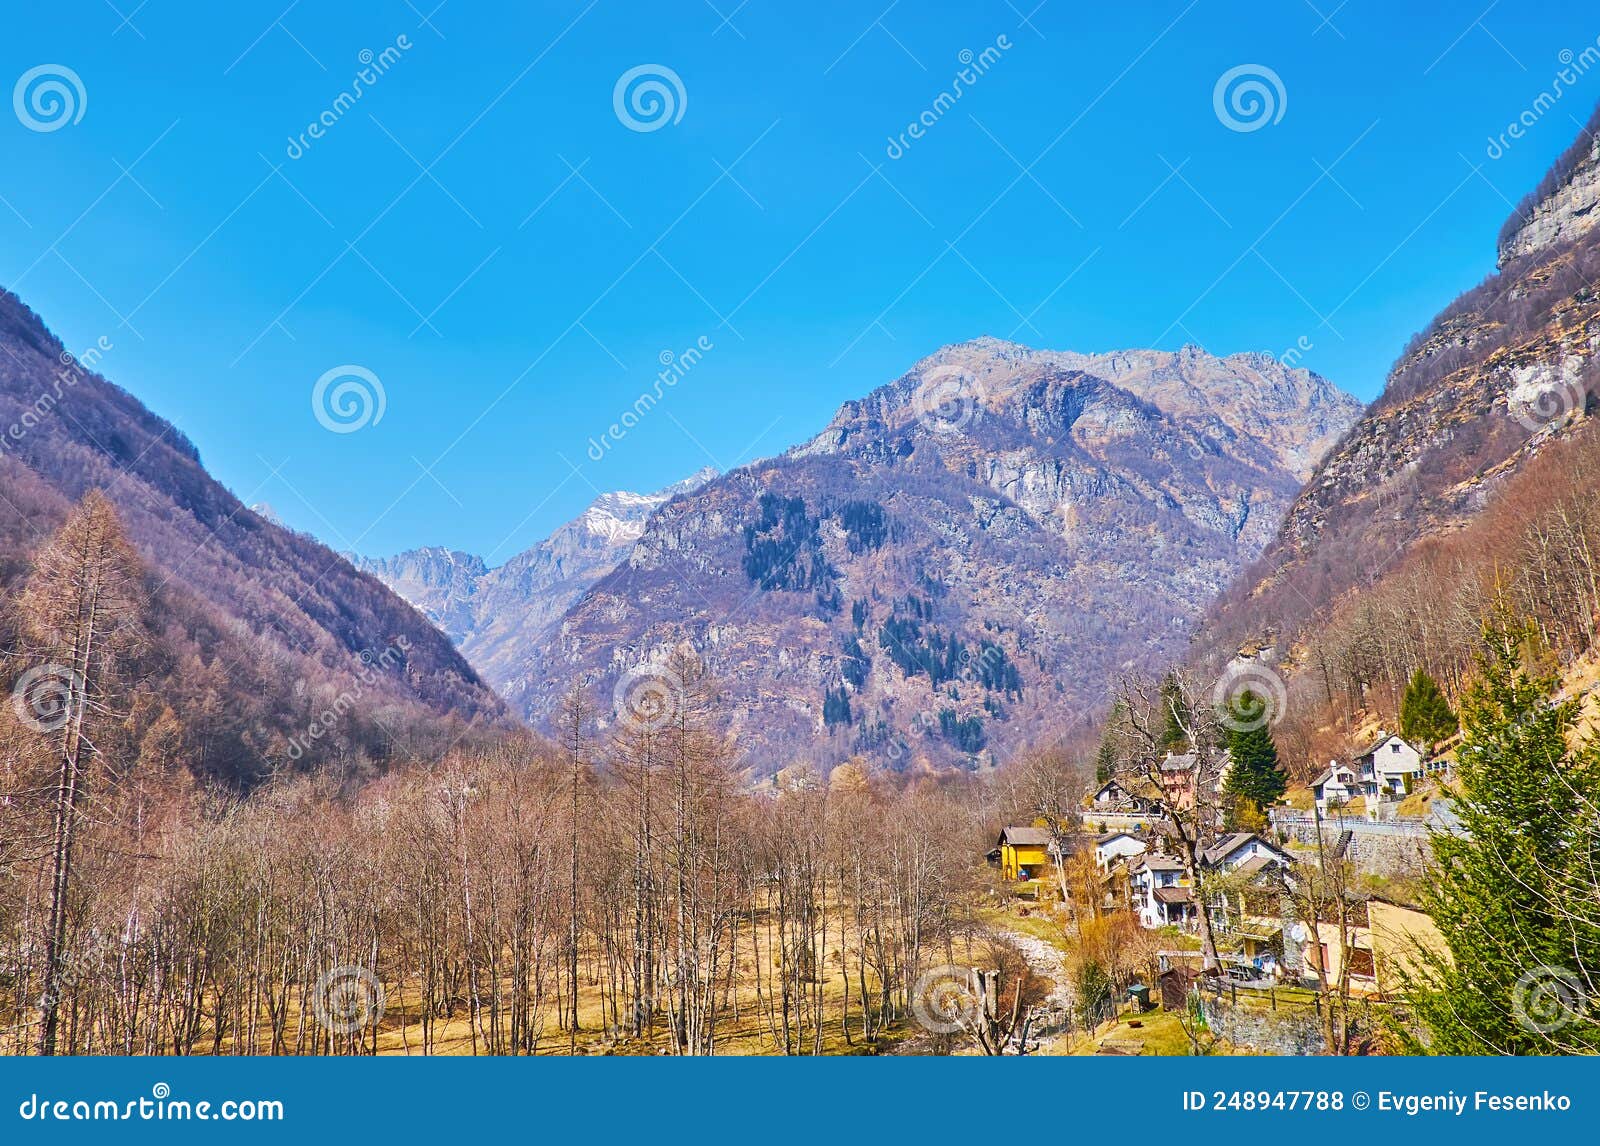 panorama of valle verzasca with houses of frasco, switzerland